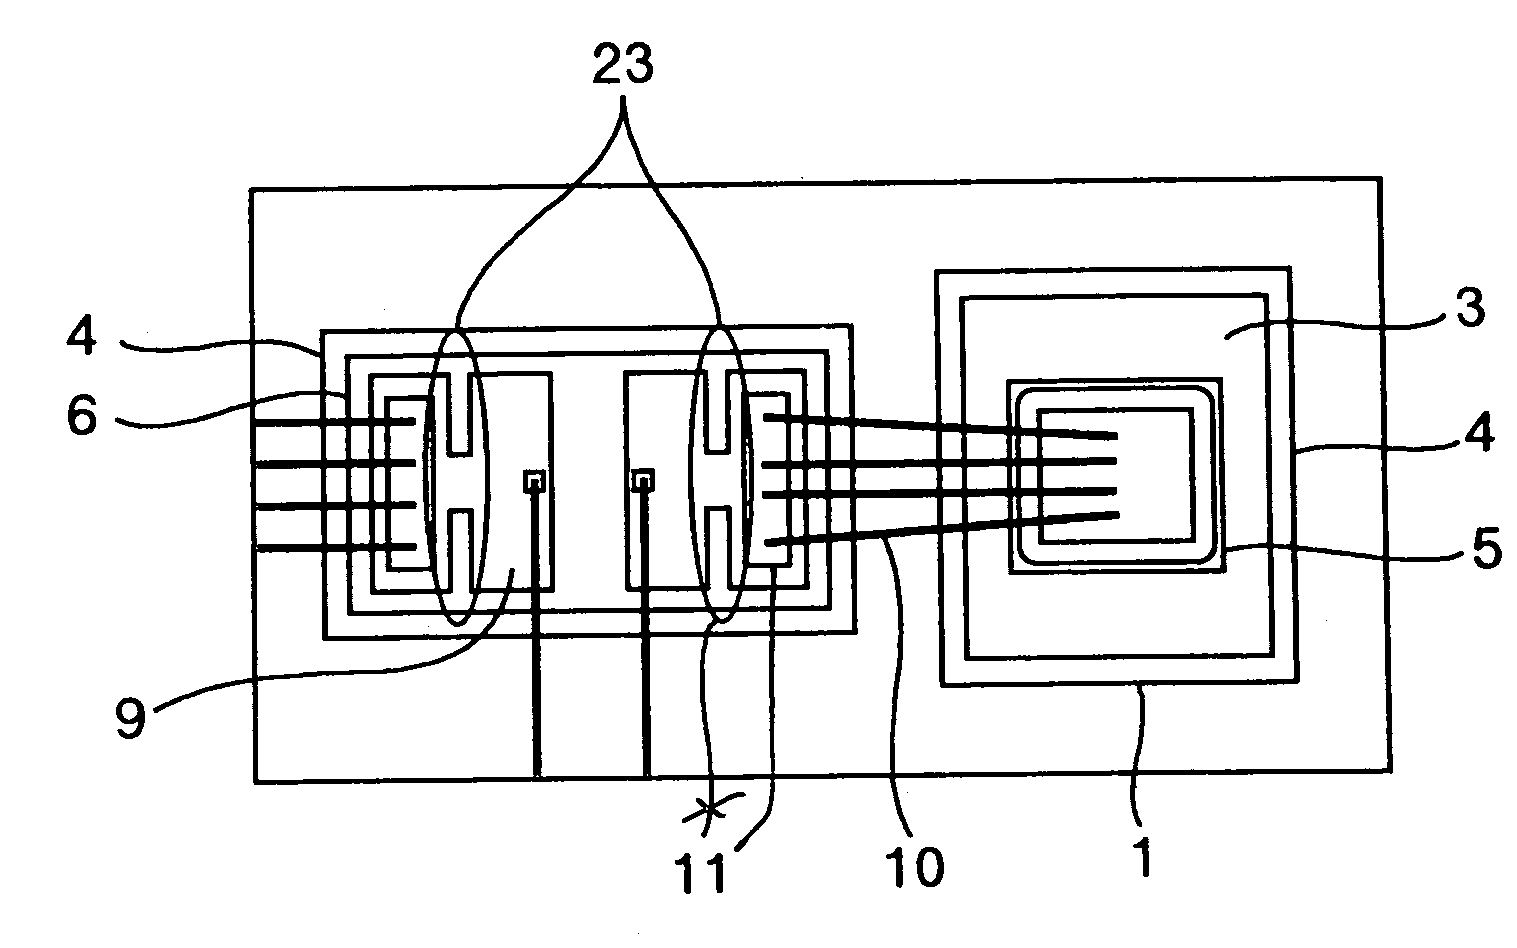 Power converter with shunt resistor